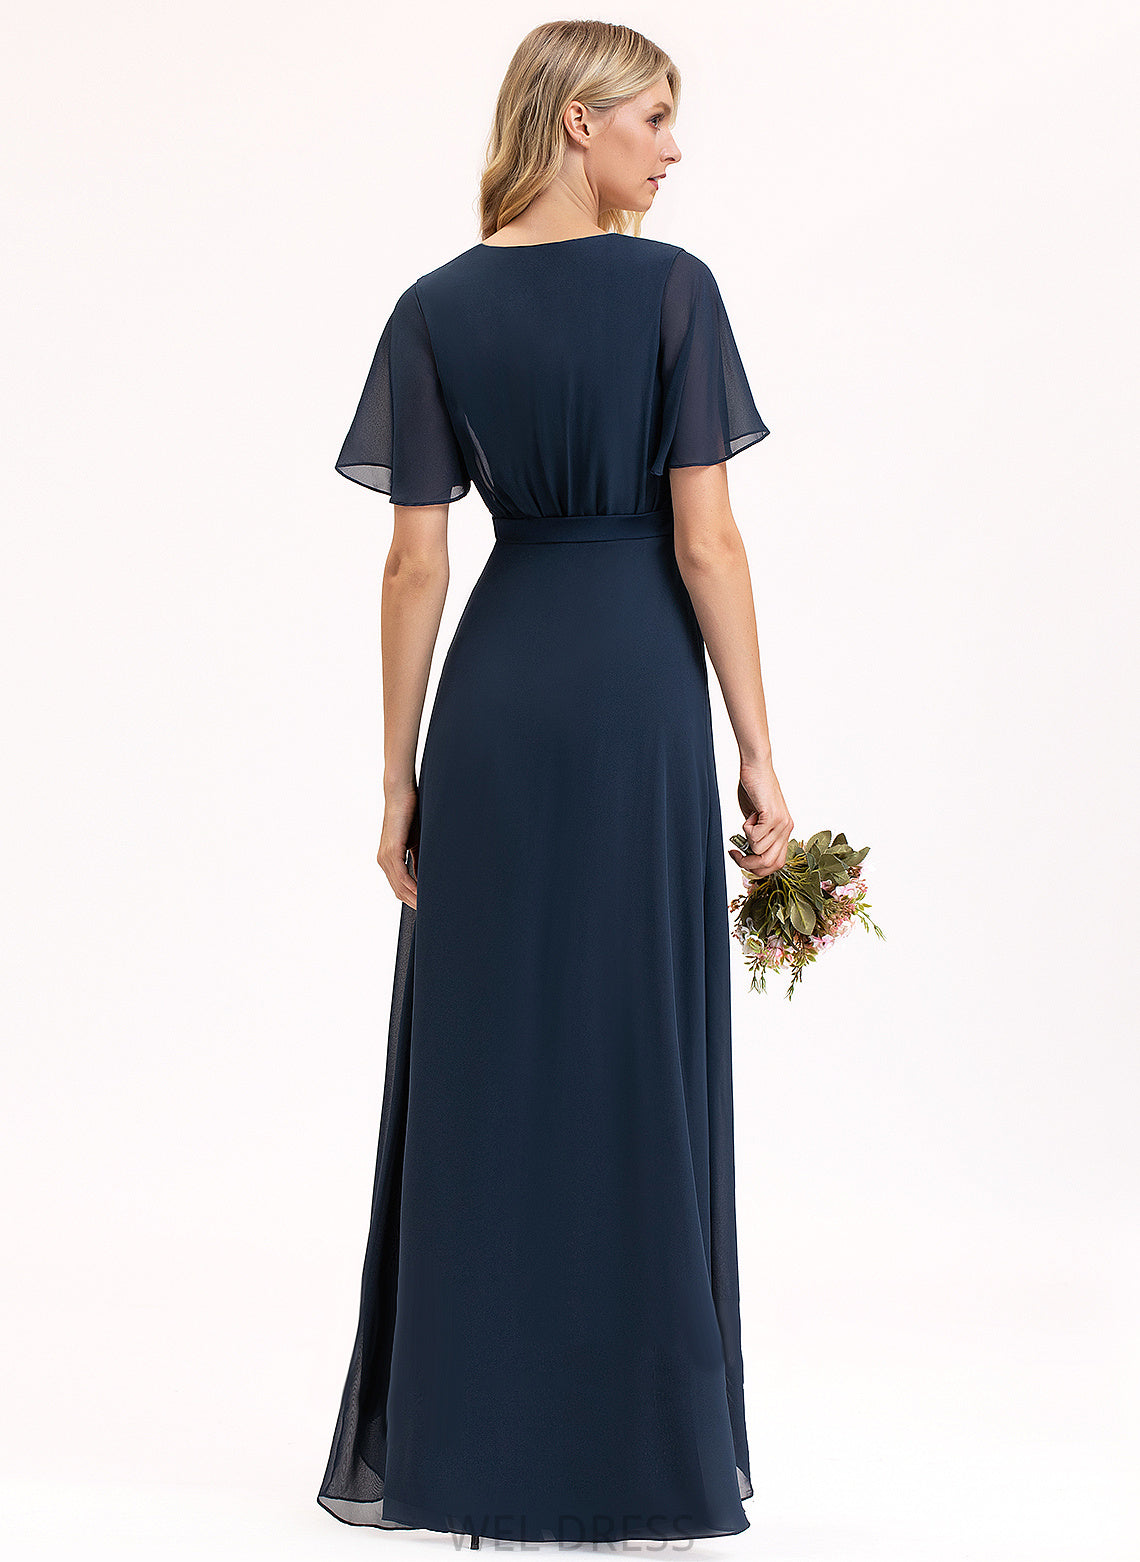 Silhouette A-Line V-neck Bow(s) Neckline Length Embellishment Asymmetrical Fabric Marely Natural Waist Sleeveless Bridesmaid Dresses